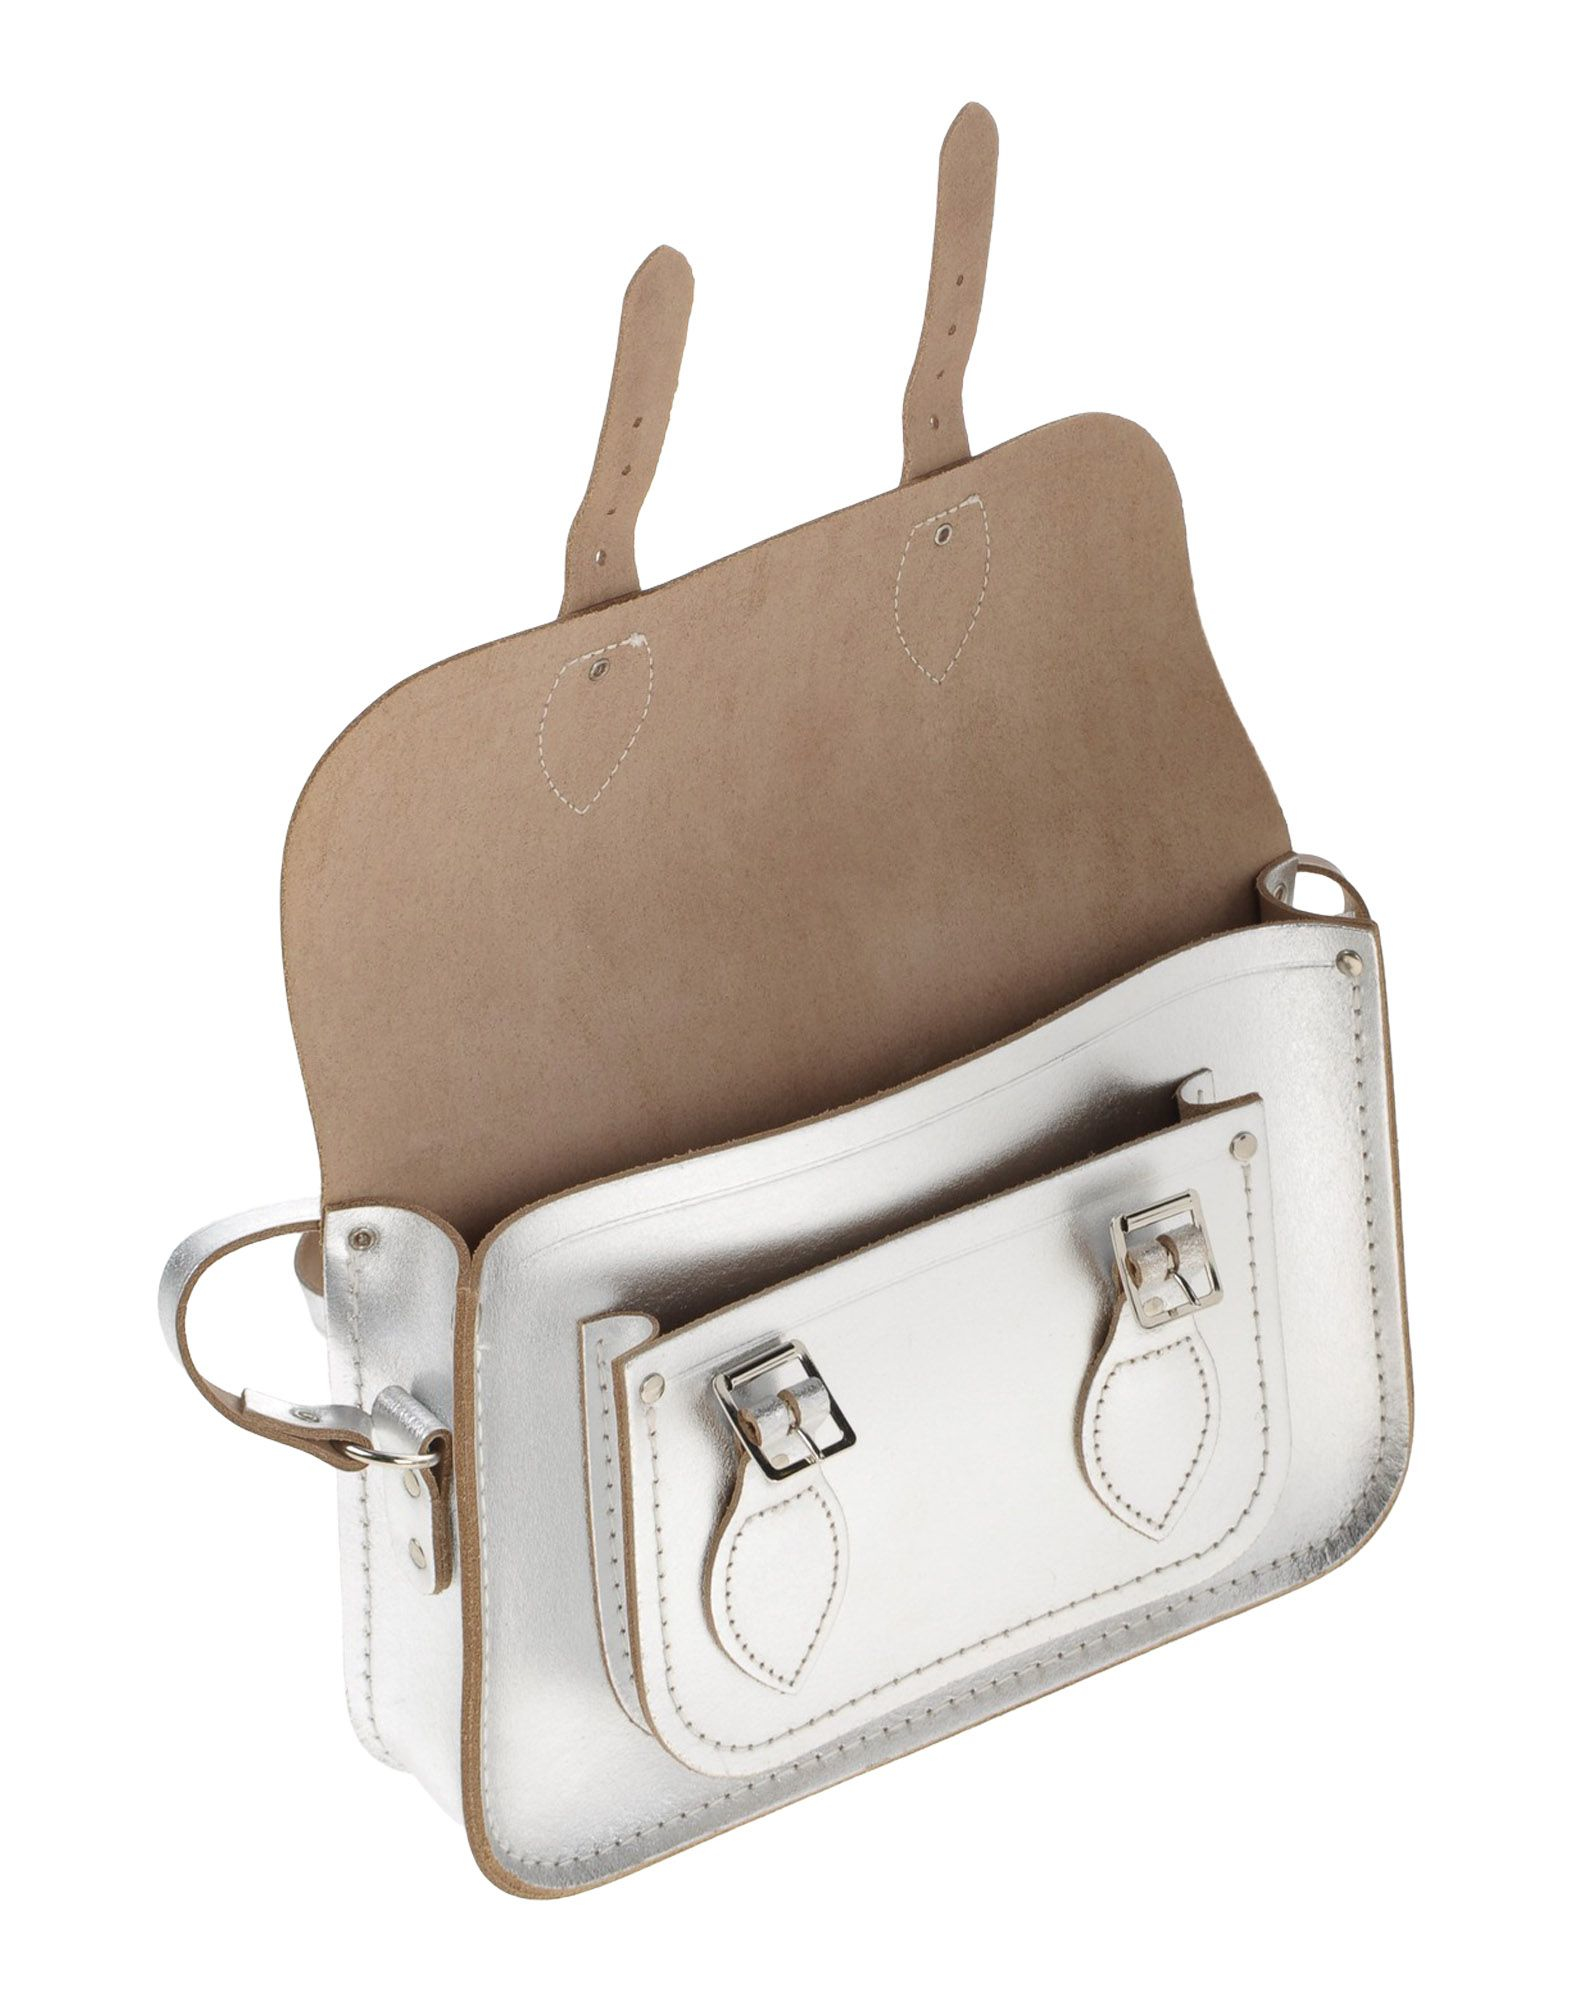 Lyst - Cambridge satchel company Cross-body Bag in Metallic